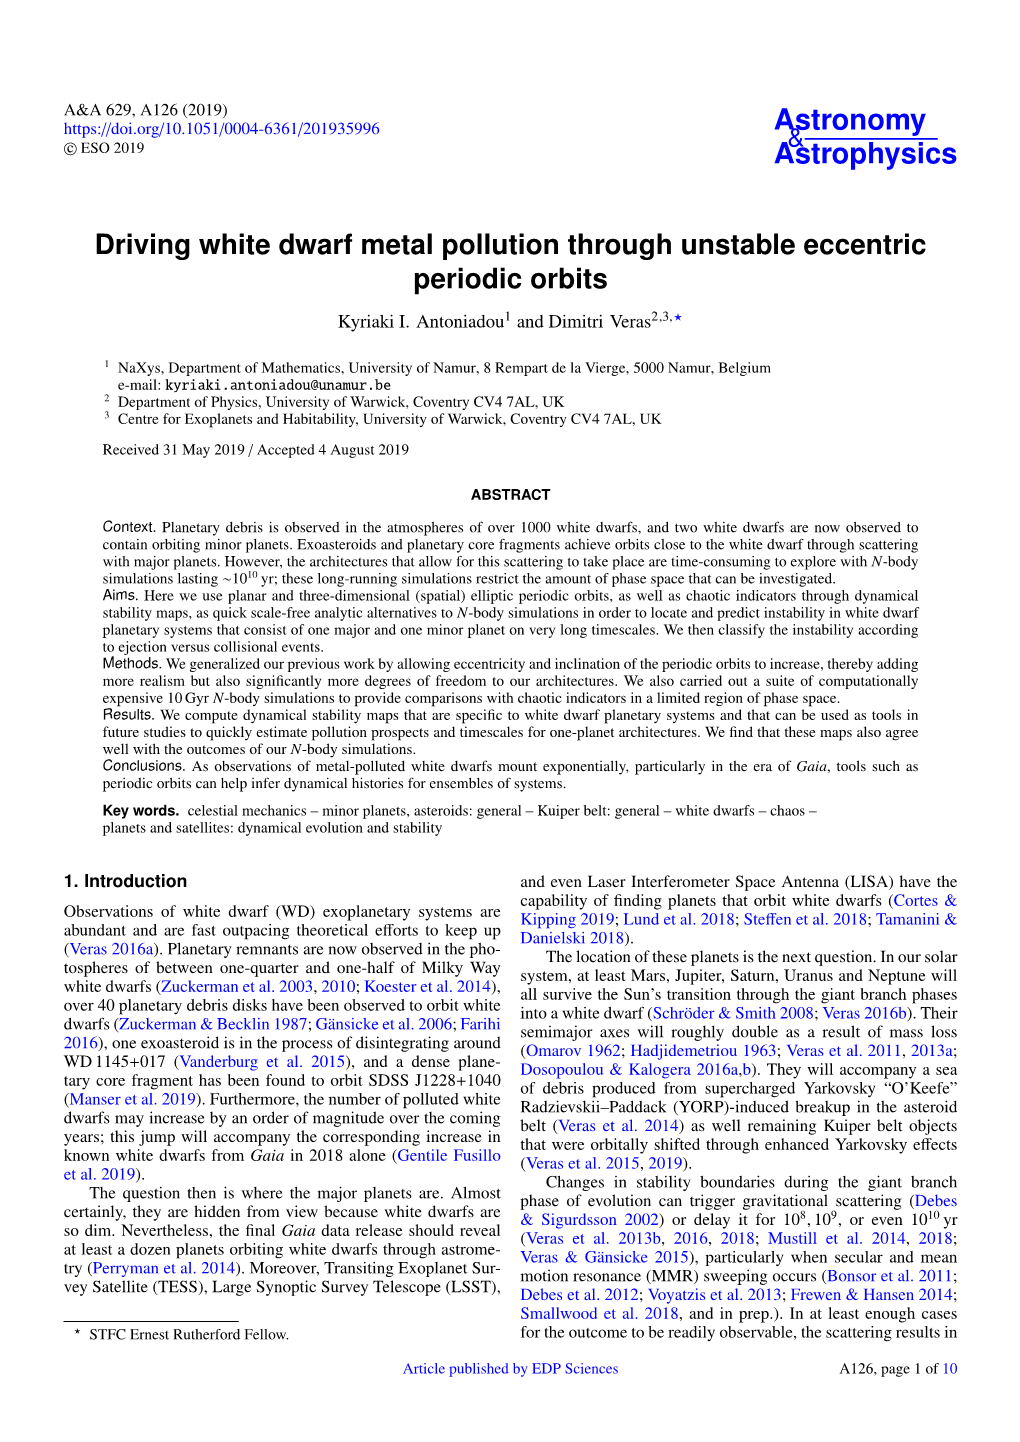 Driving White Dwarf Metal Pollution Through Unstable Eccentric Periodic Orbits Kyriaki I